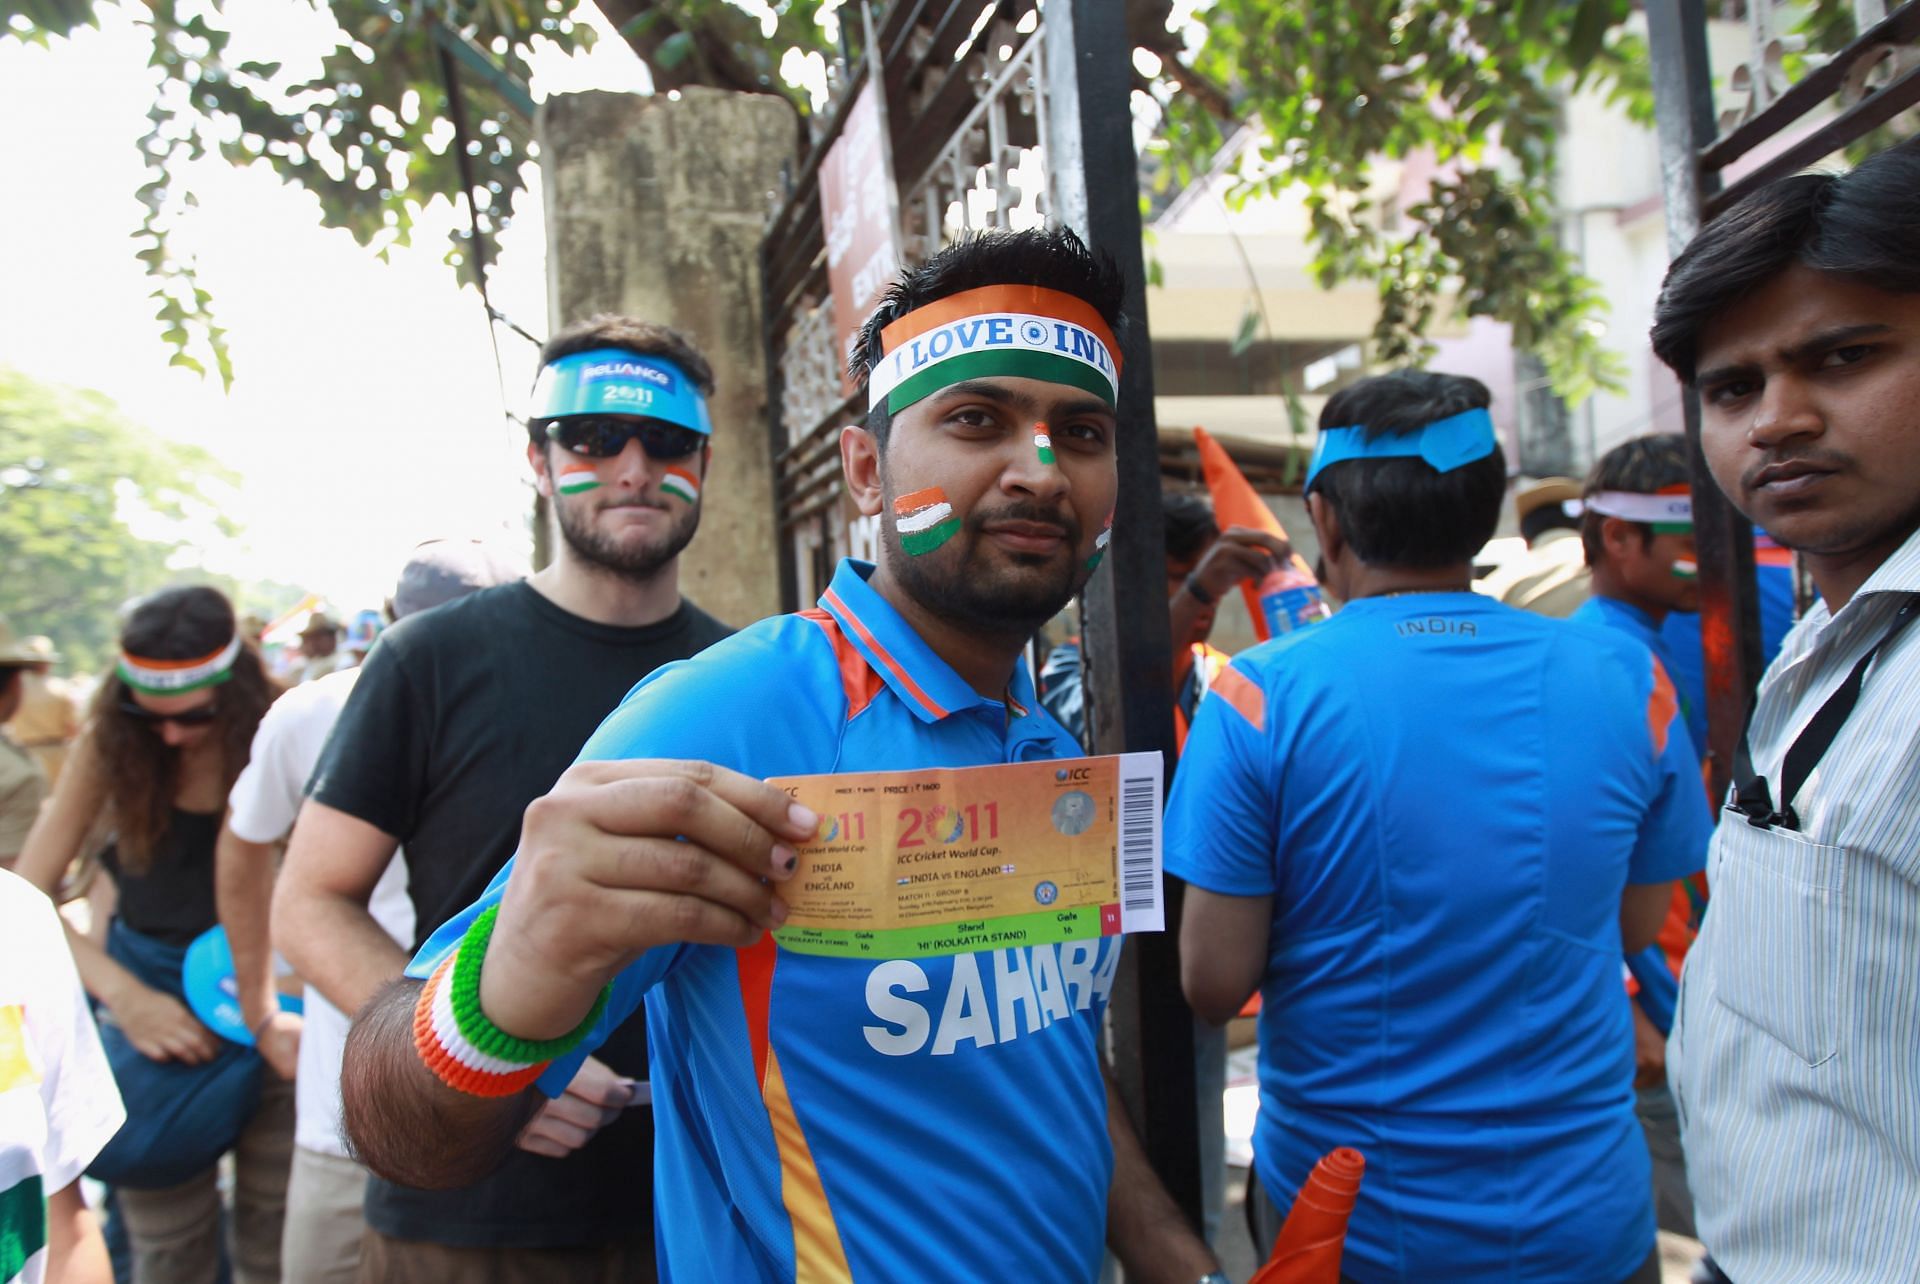 India v England: Group B - 2011 ICC World Cup